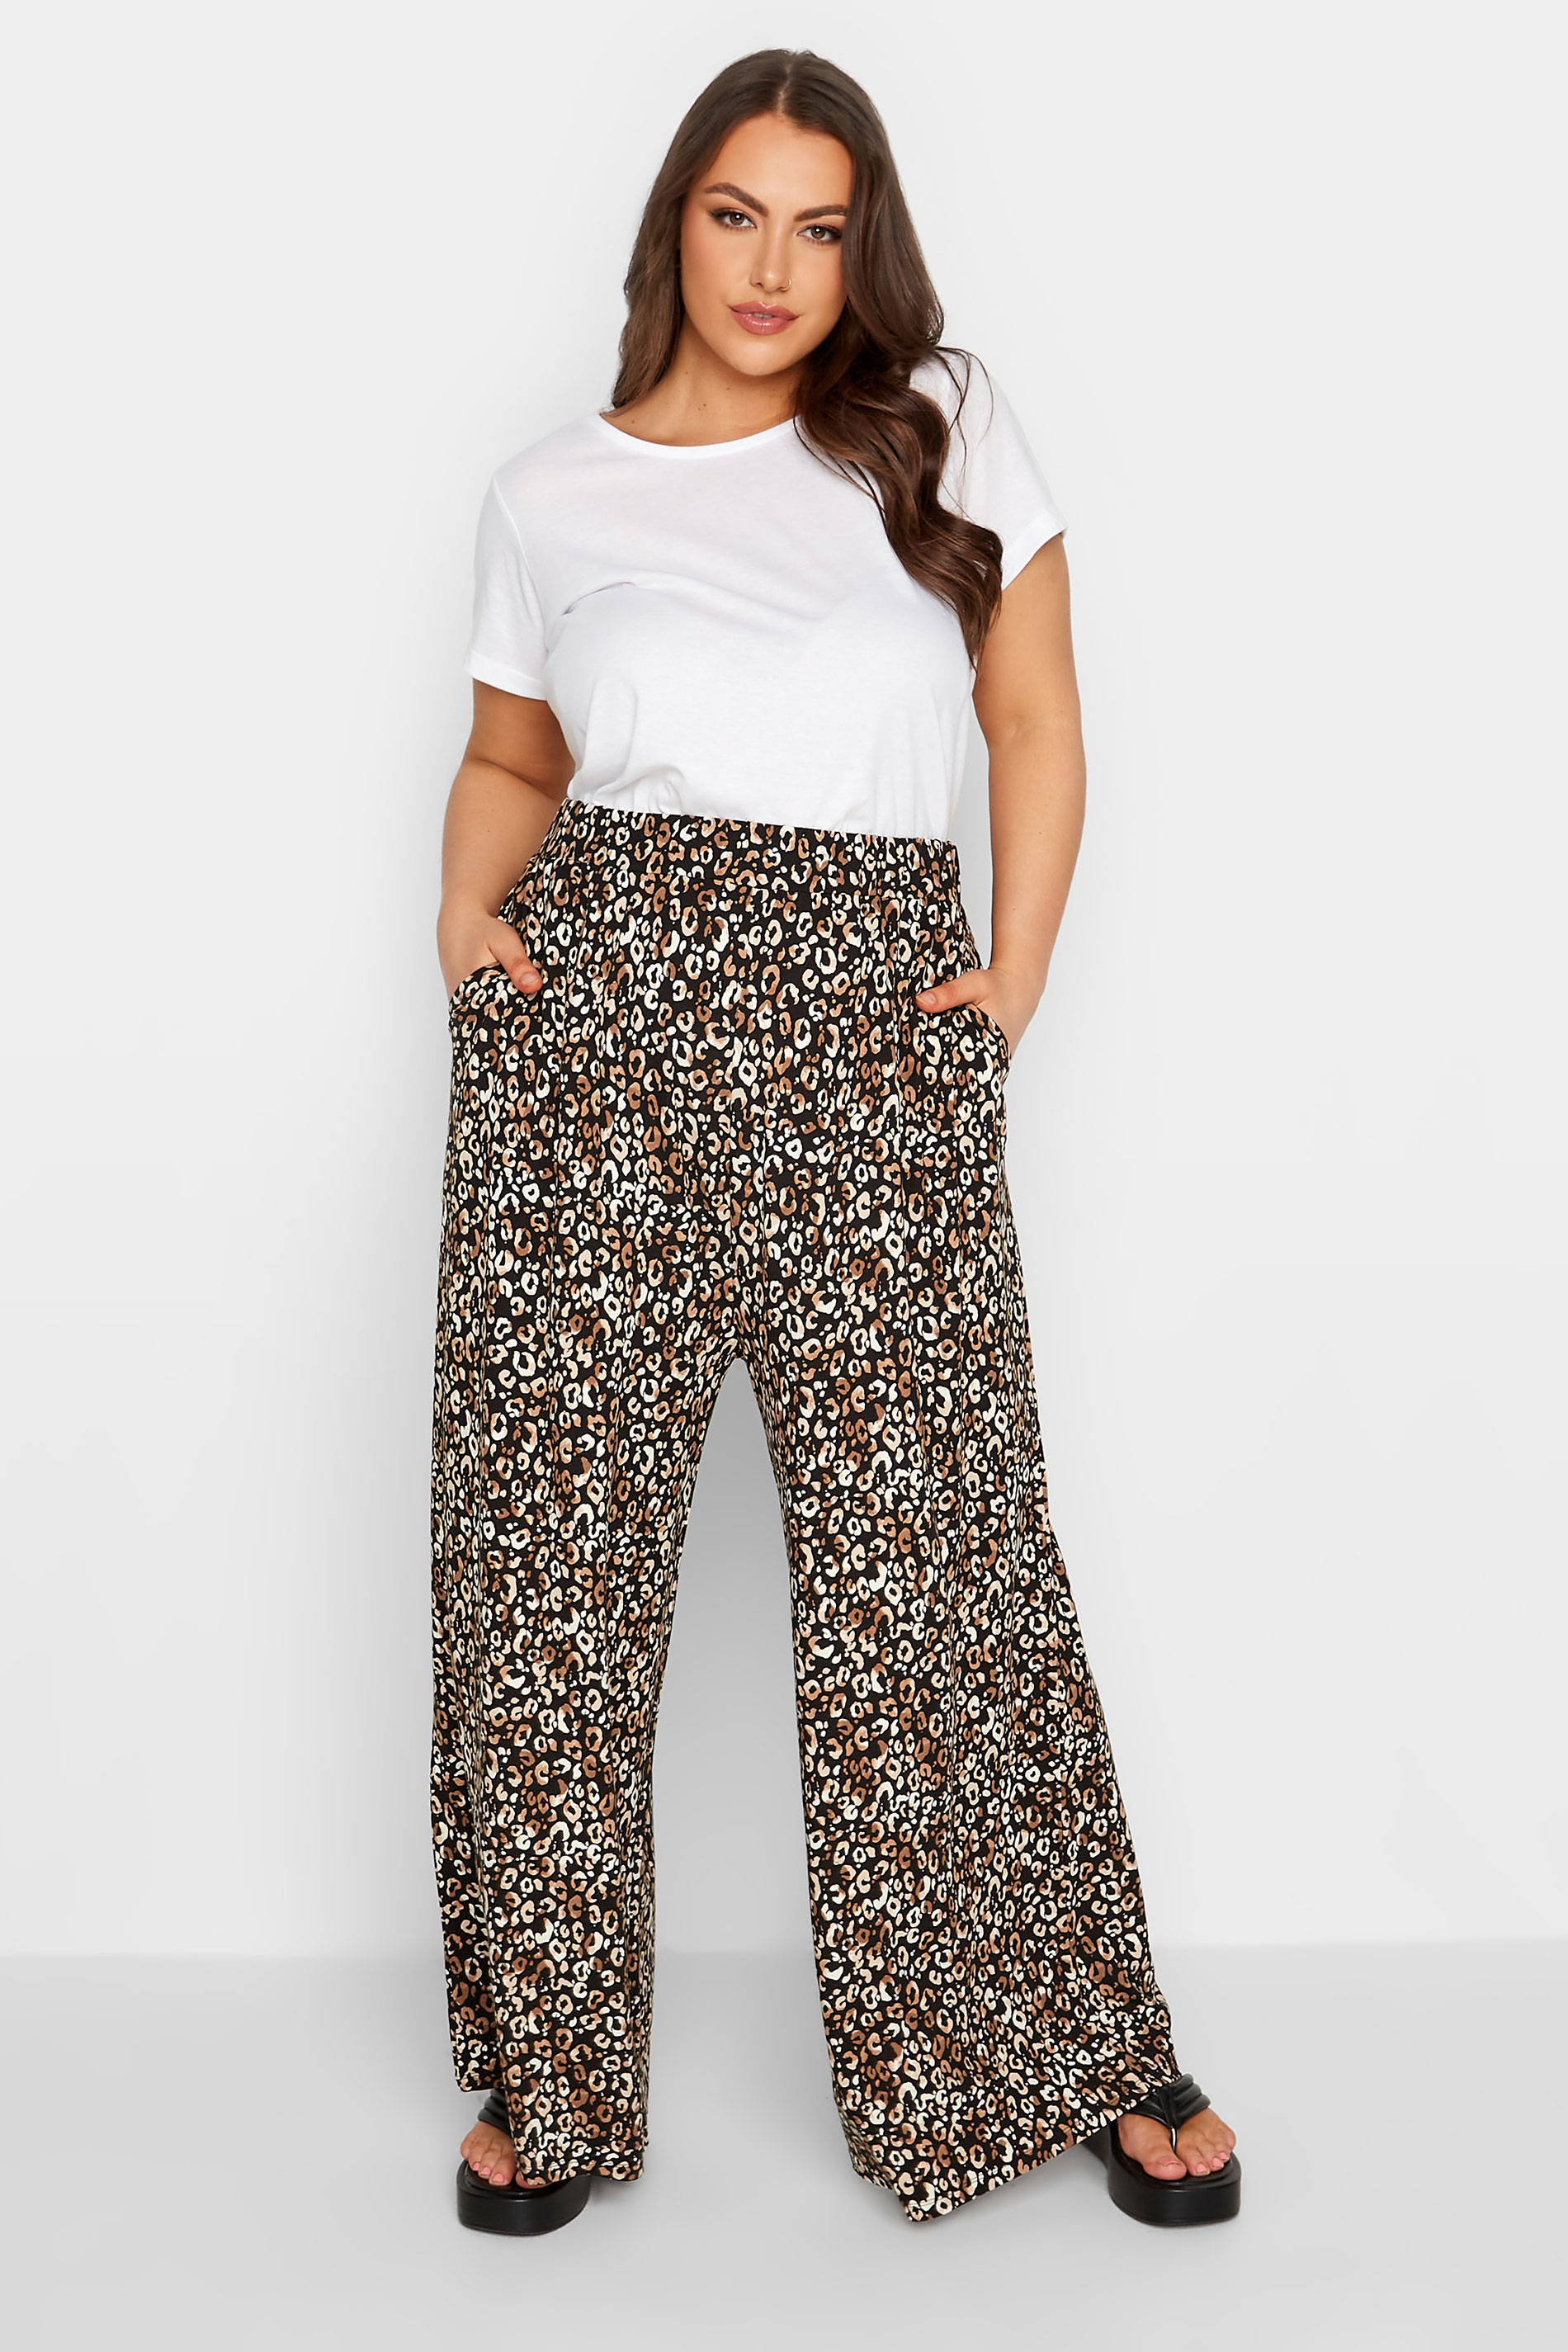 WDIRARA Women's Leopard Print Elastic High Waist Wide Leg Pants Casual Pants  Multicolored S at Amazon Women's Clothing store